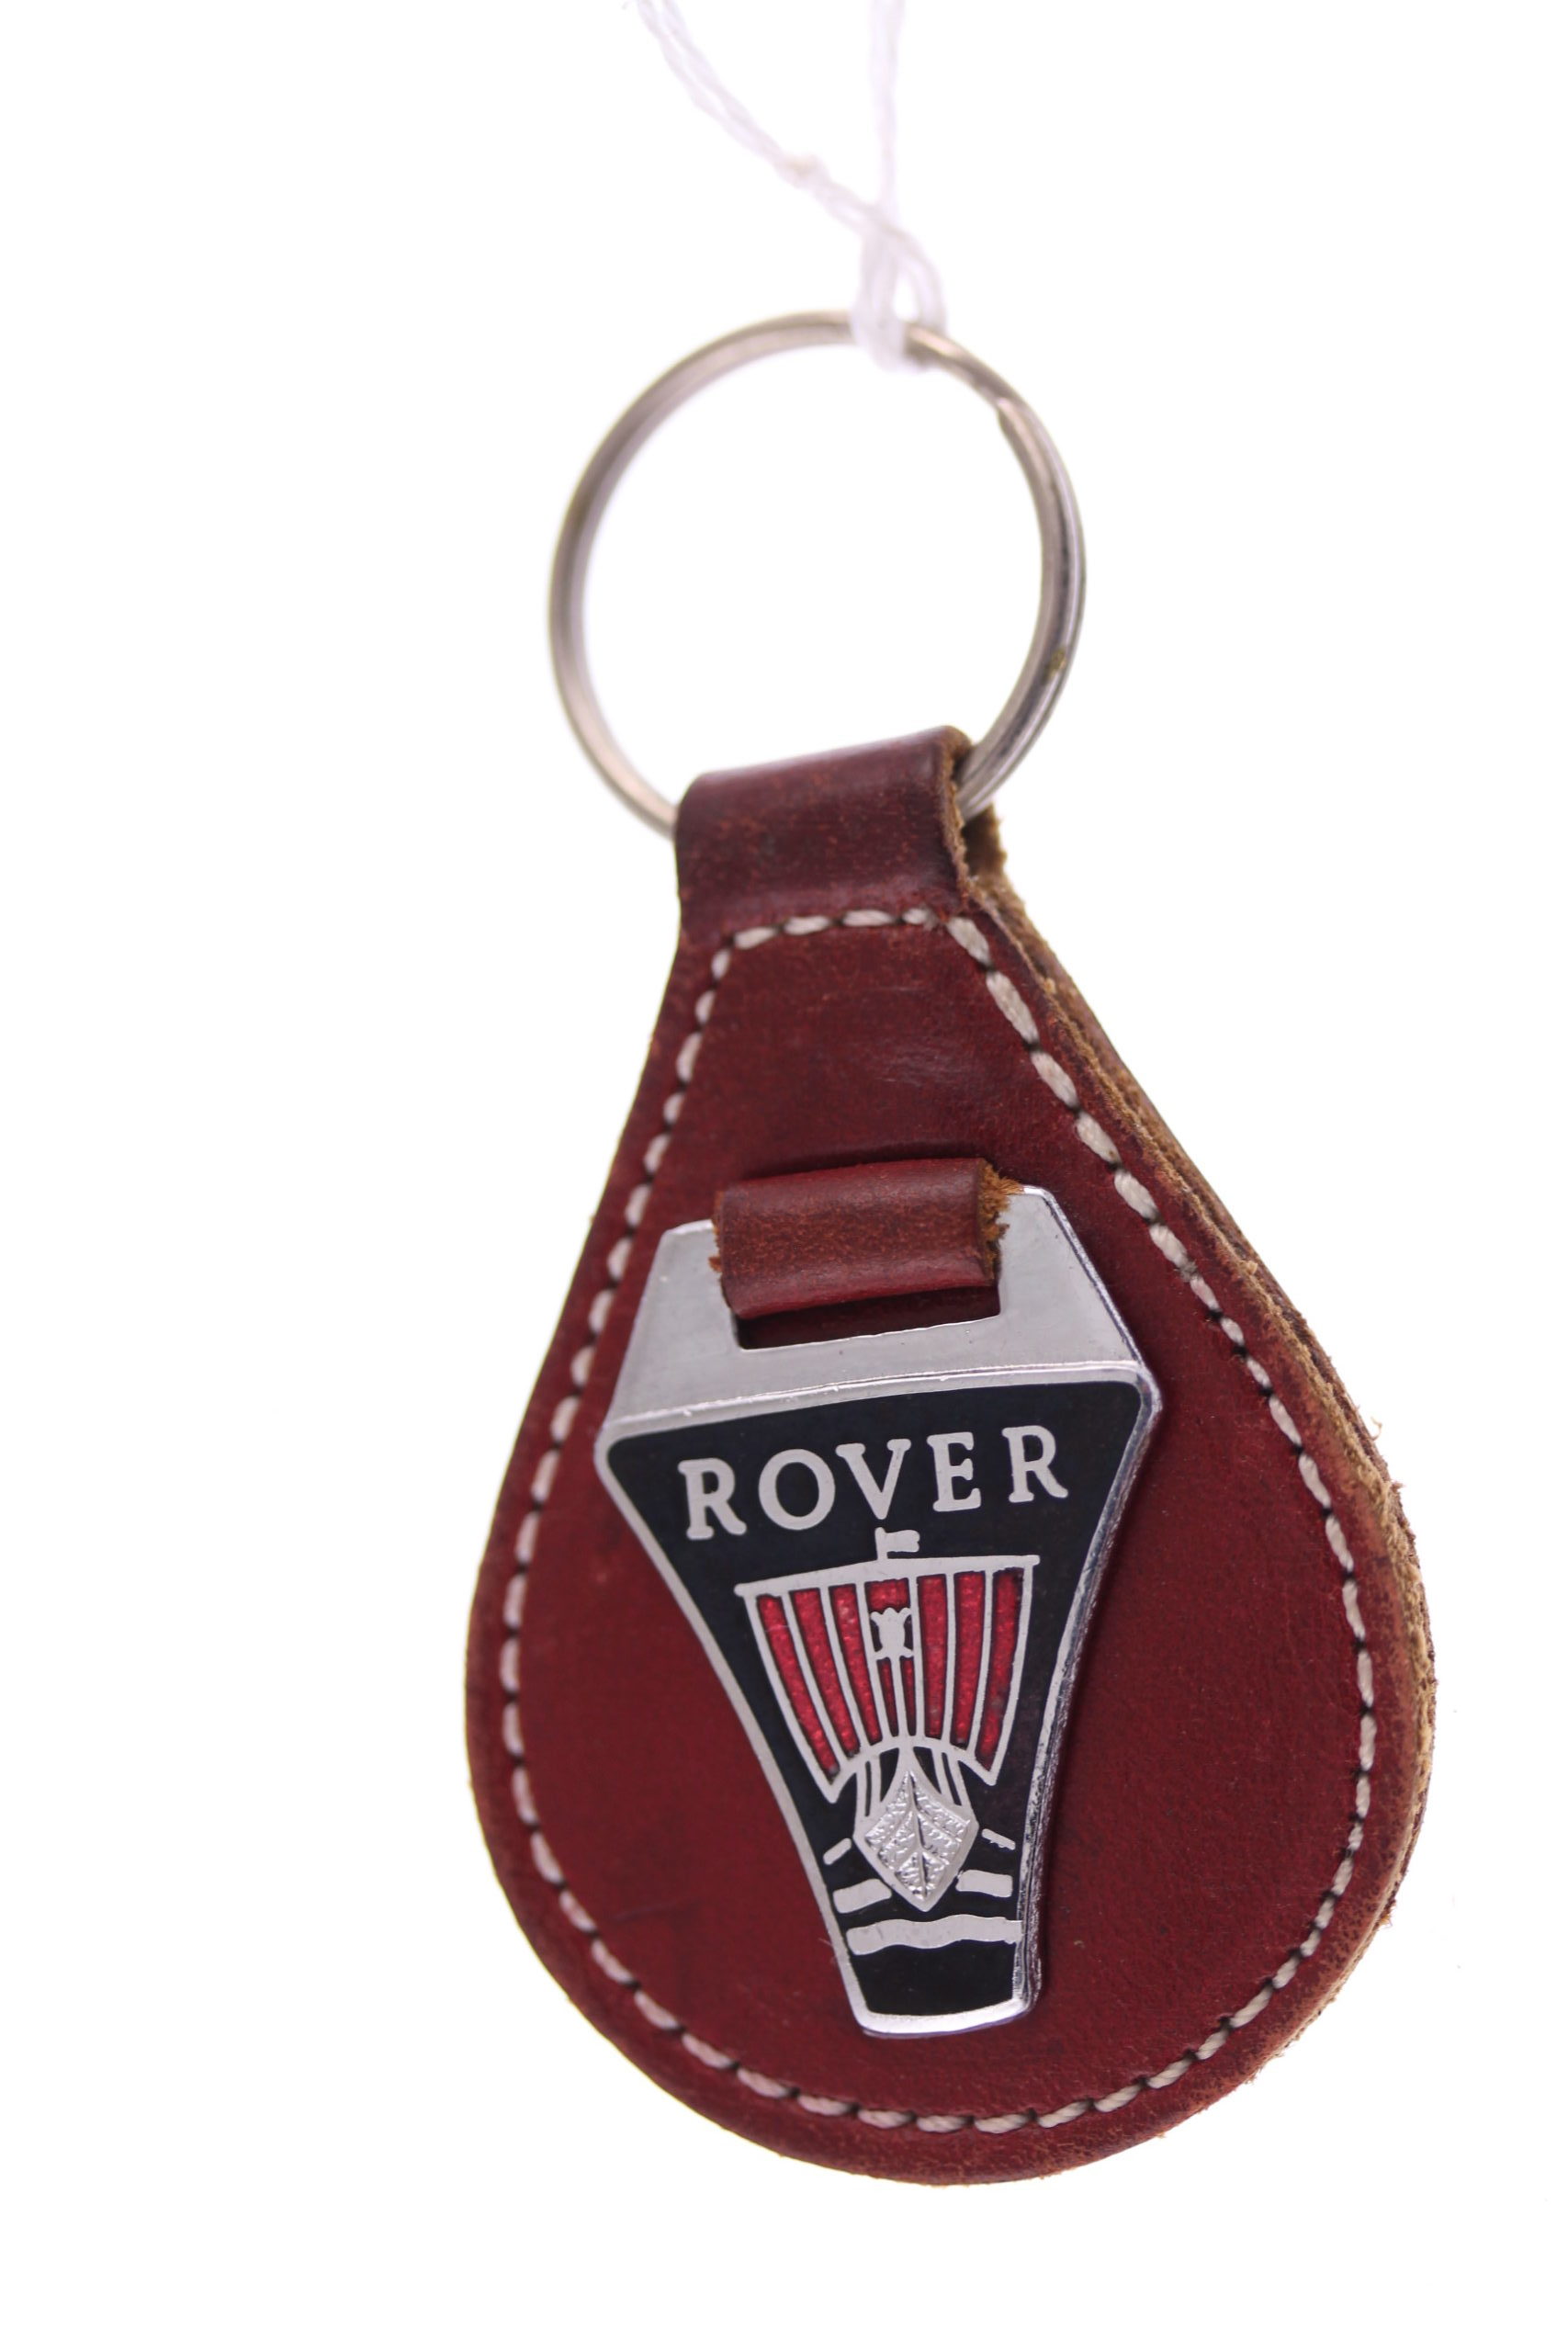 Rover P5B Vintage Keyring Badge Key Fob 1960s Melsom Birmingham